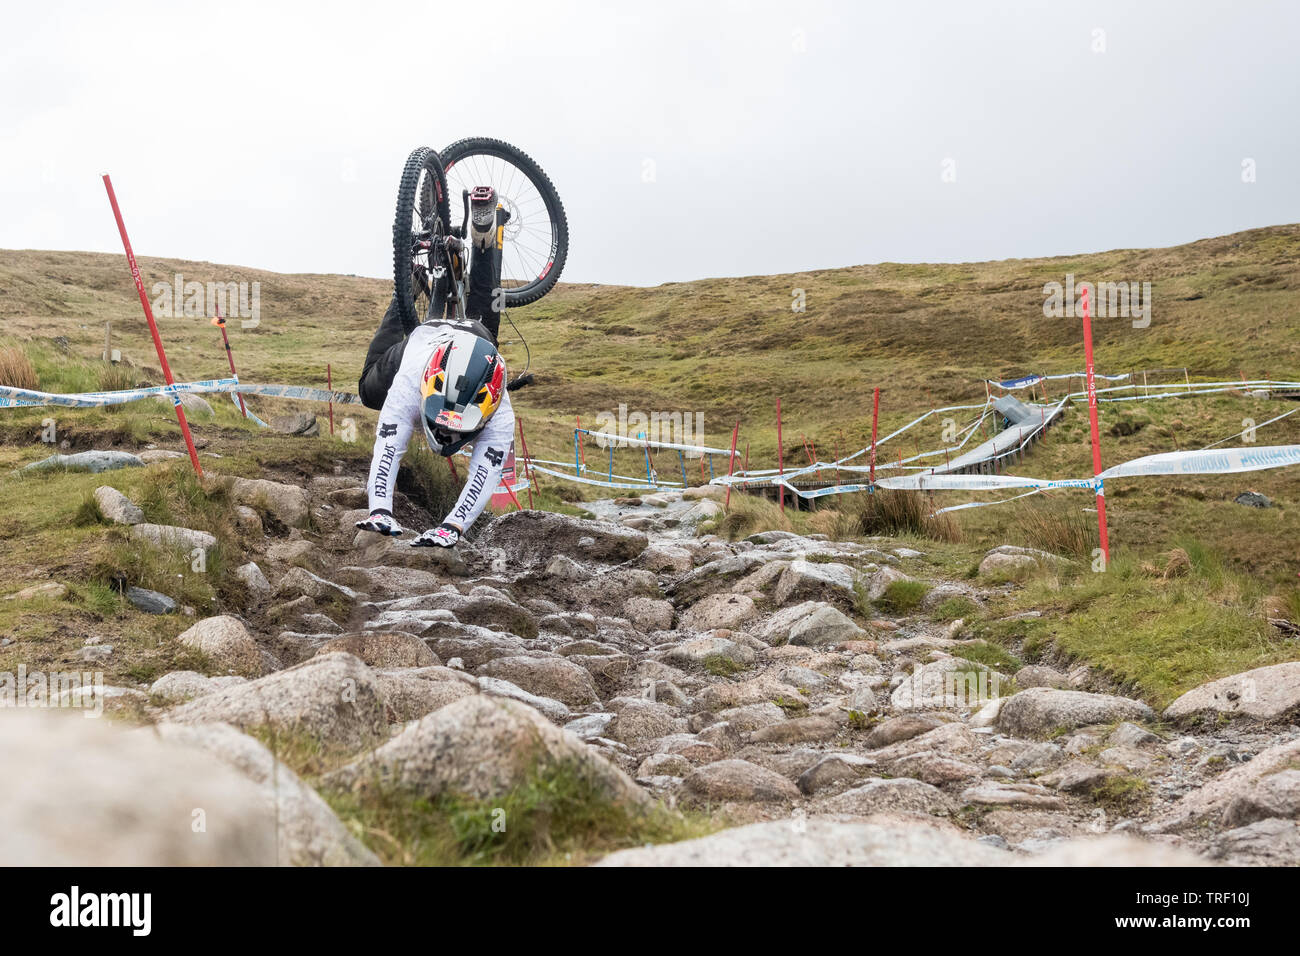 Finn Iles crash durante la sequenza di esecuzione pratica - UCI Mountain Bike World Cup a Fort William Scozia - Serie di 13 immagini immagine 8/13 Foto Stock